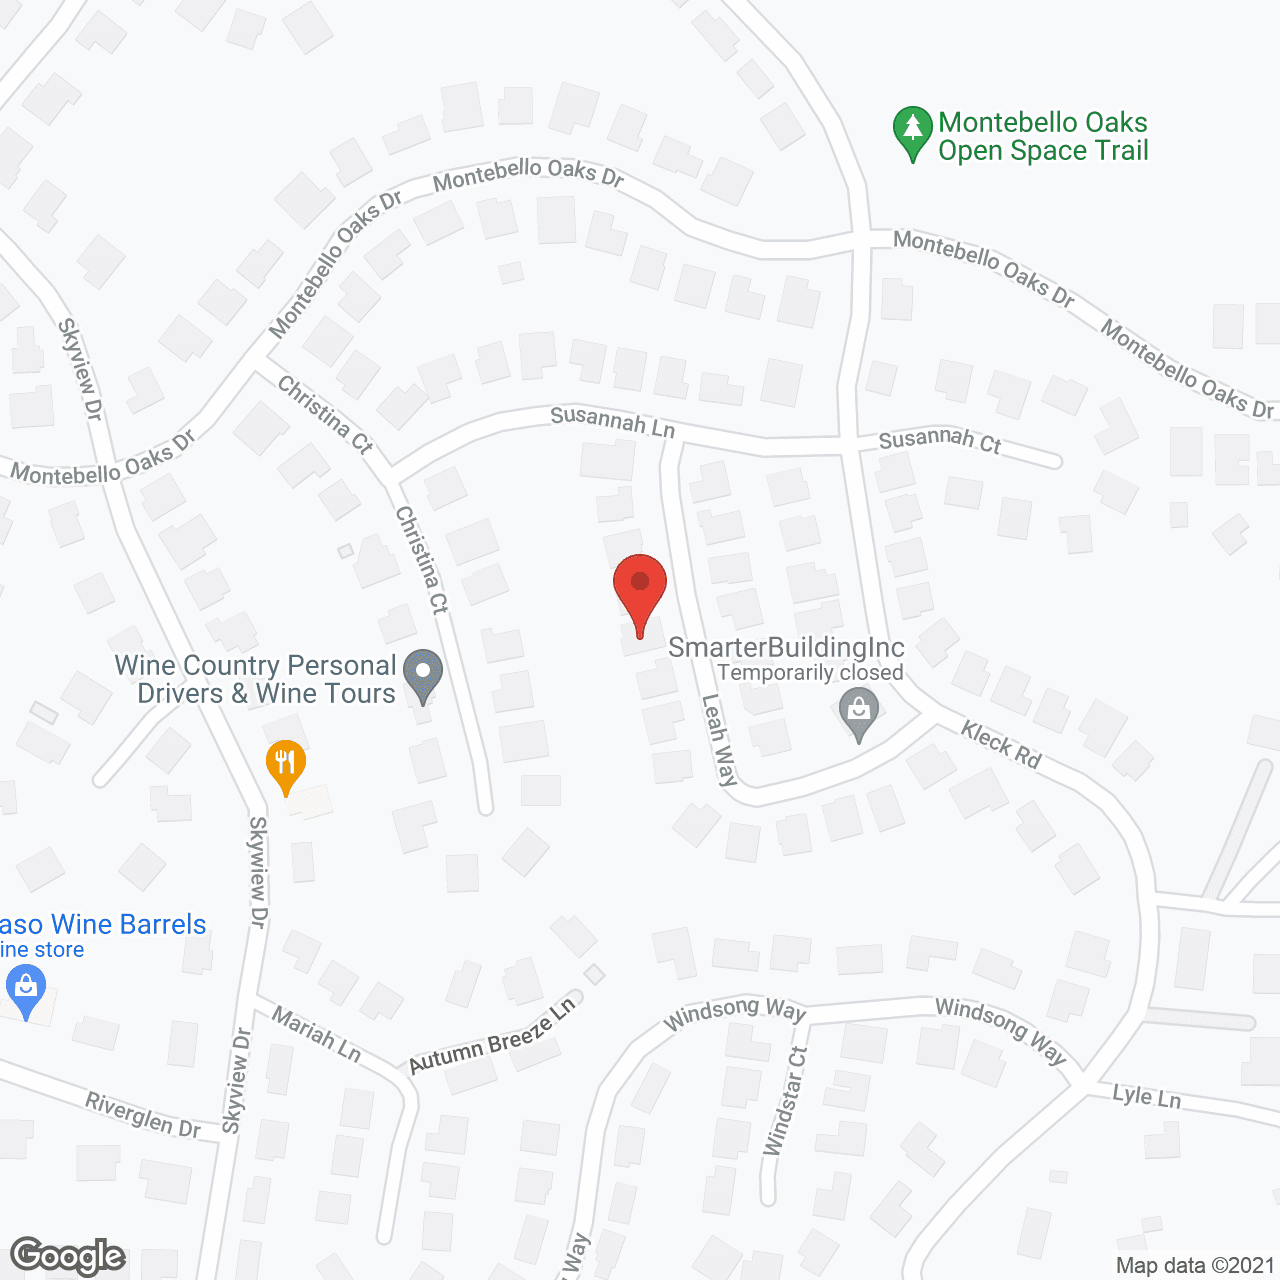 Christian Home for the Elderly in google map